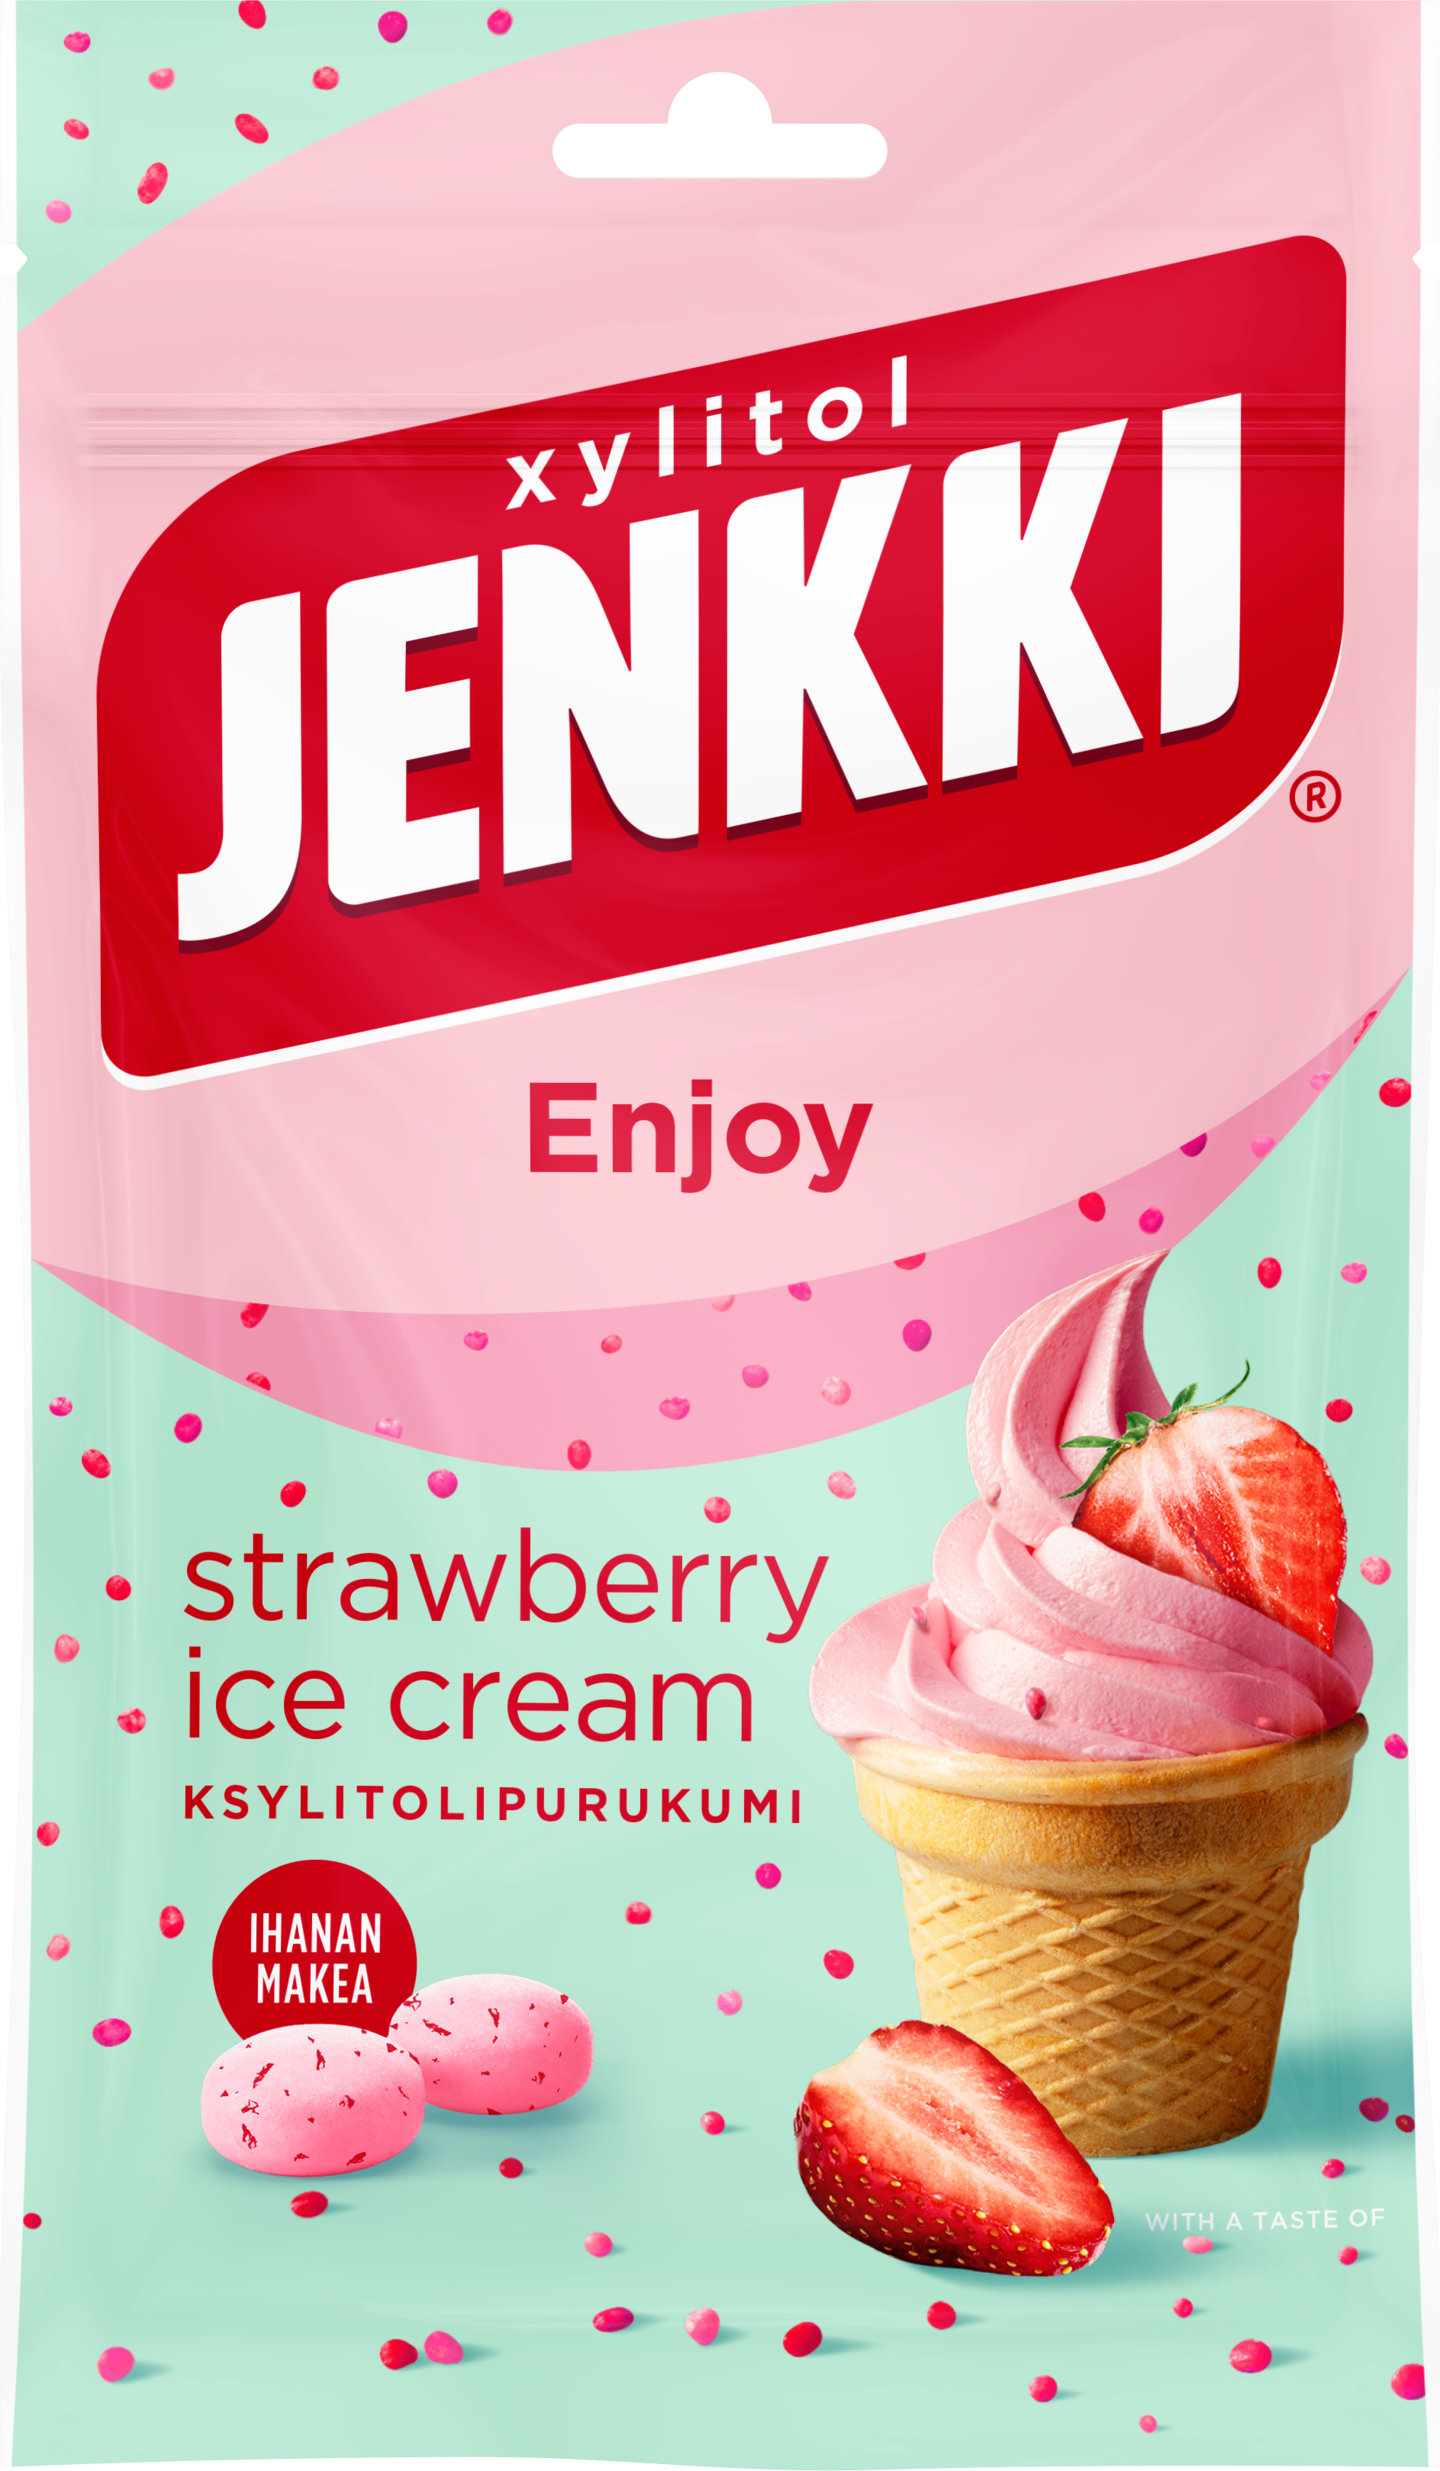 Jenkki Enjoy 70g Strawberry Ice Cream